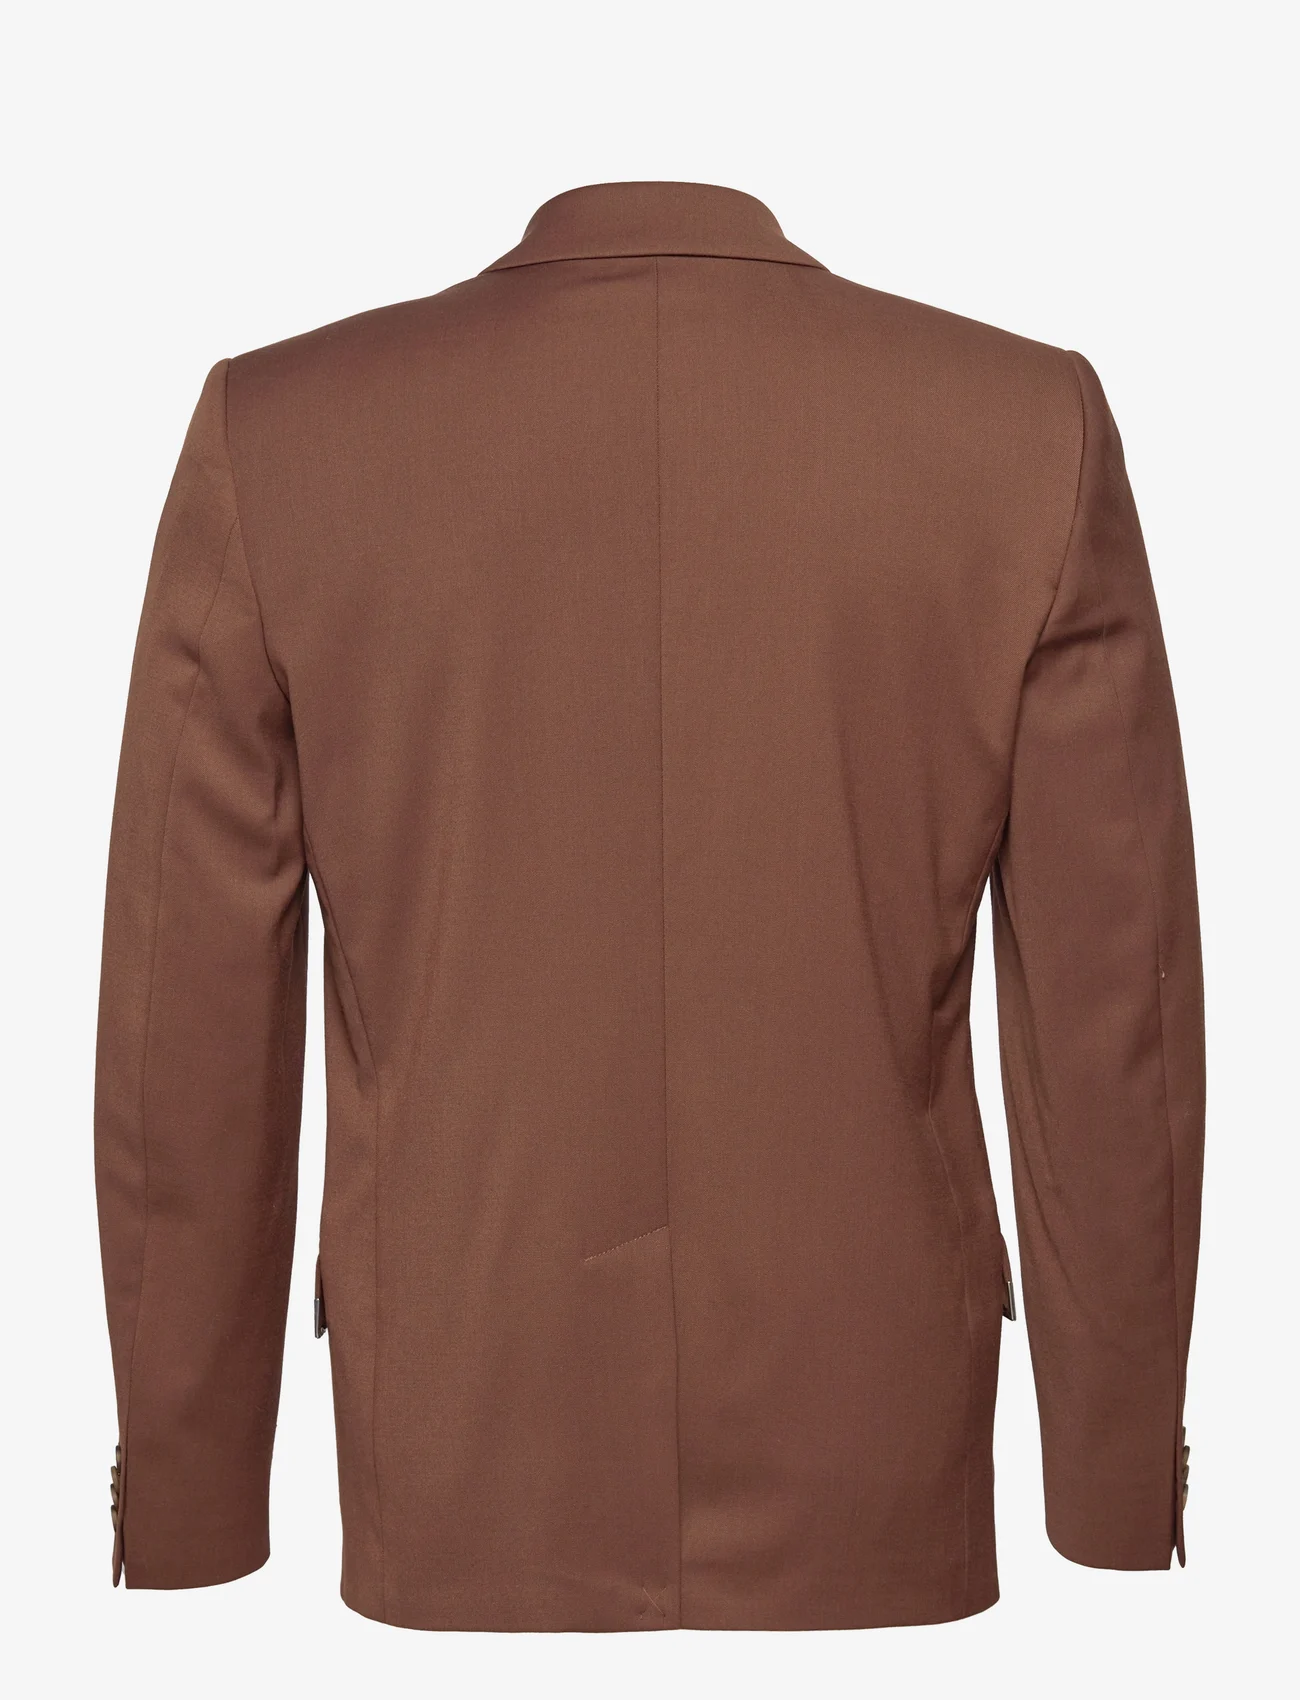 HAN Kjøbenhavn - Single Suit Blazer - dubbelknäppta kavajer - brown - 1